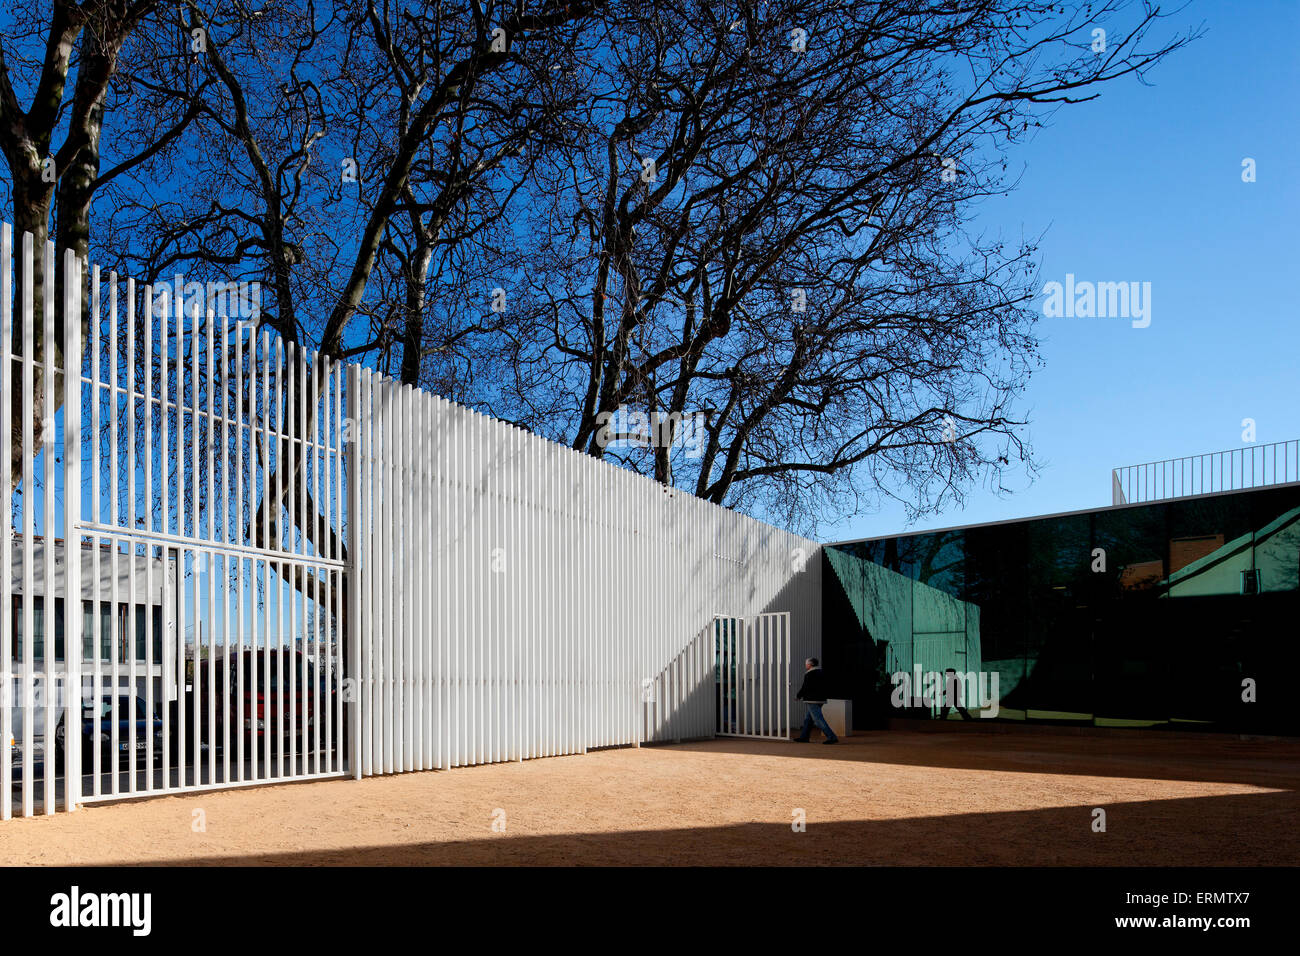 Fenced in schoolyard area. Center School S.Miguel de Nevogilde, Oporto, Portugal. Architect: AVA Architects, 2012. Stock Photo